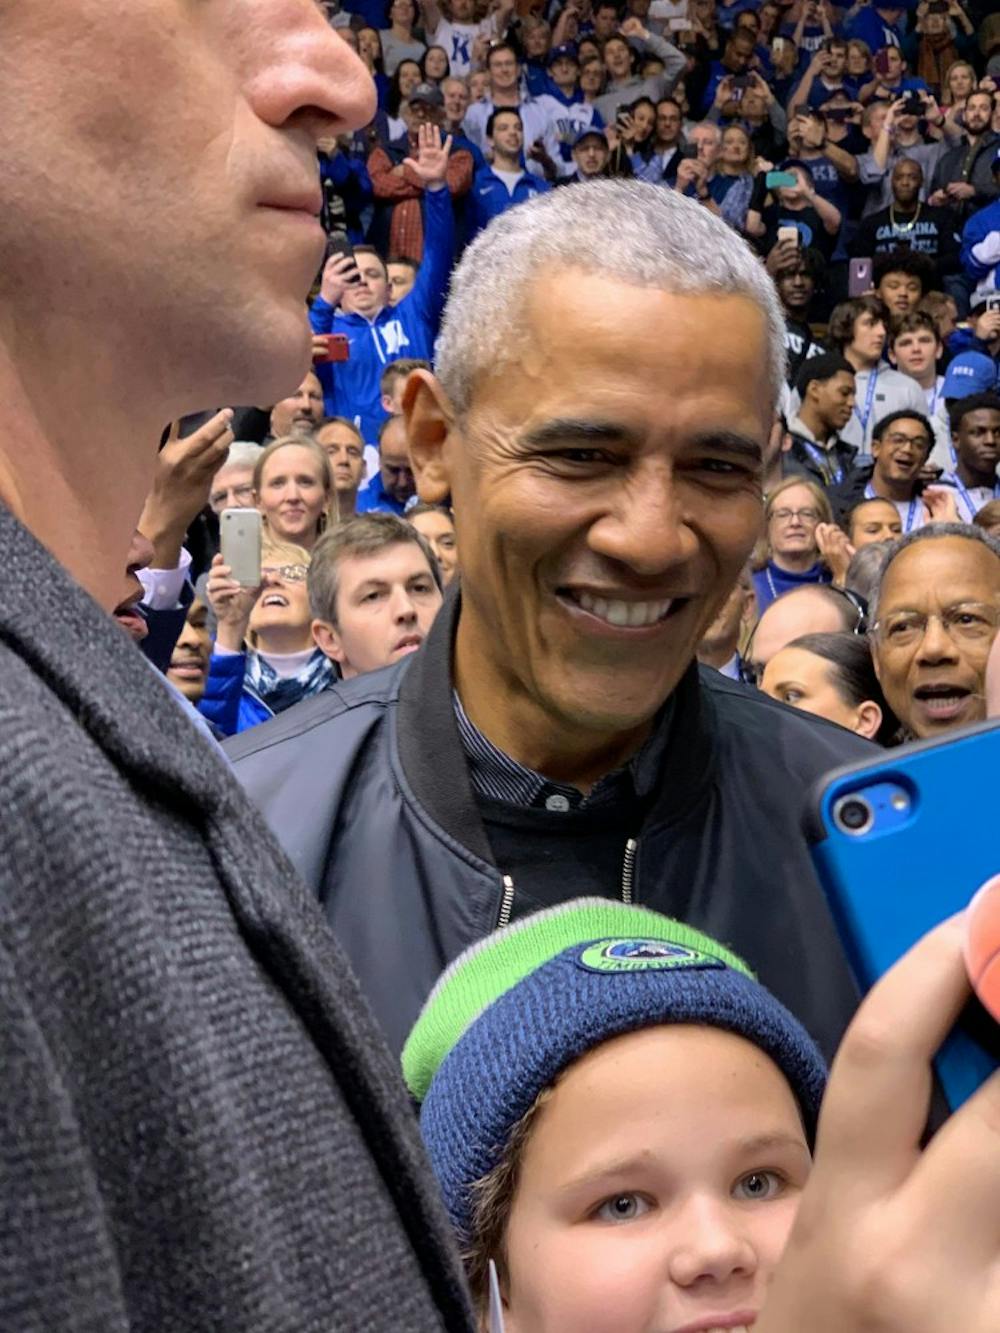 Barack Obama is in Cameron Indoor Stadium for the Duke-North Carolina game. 